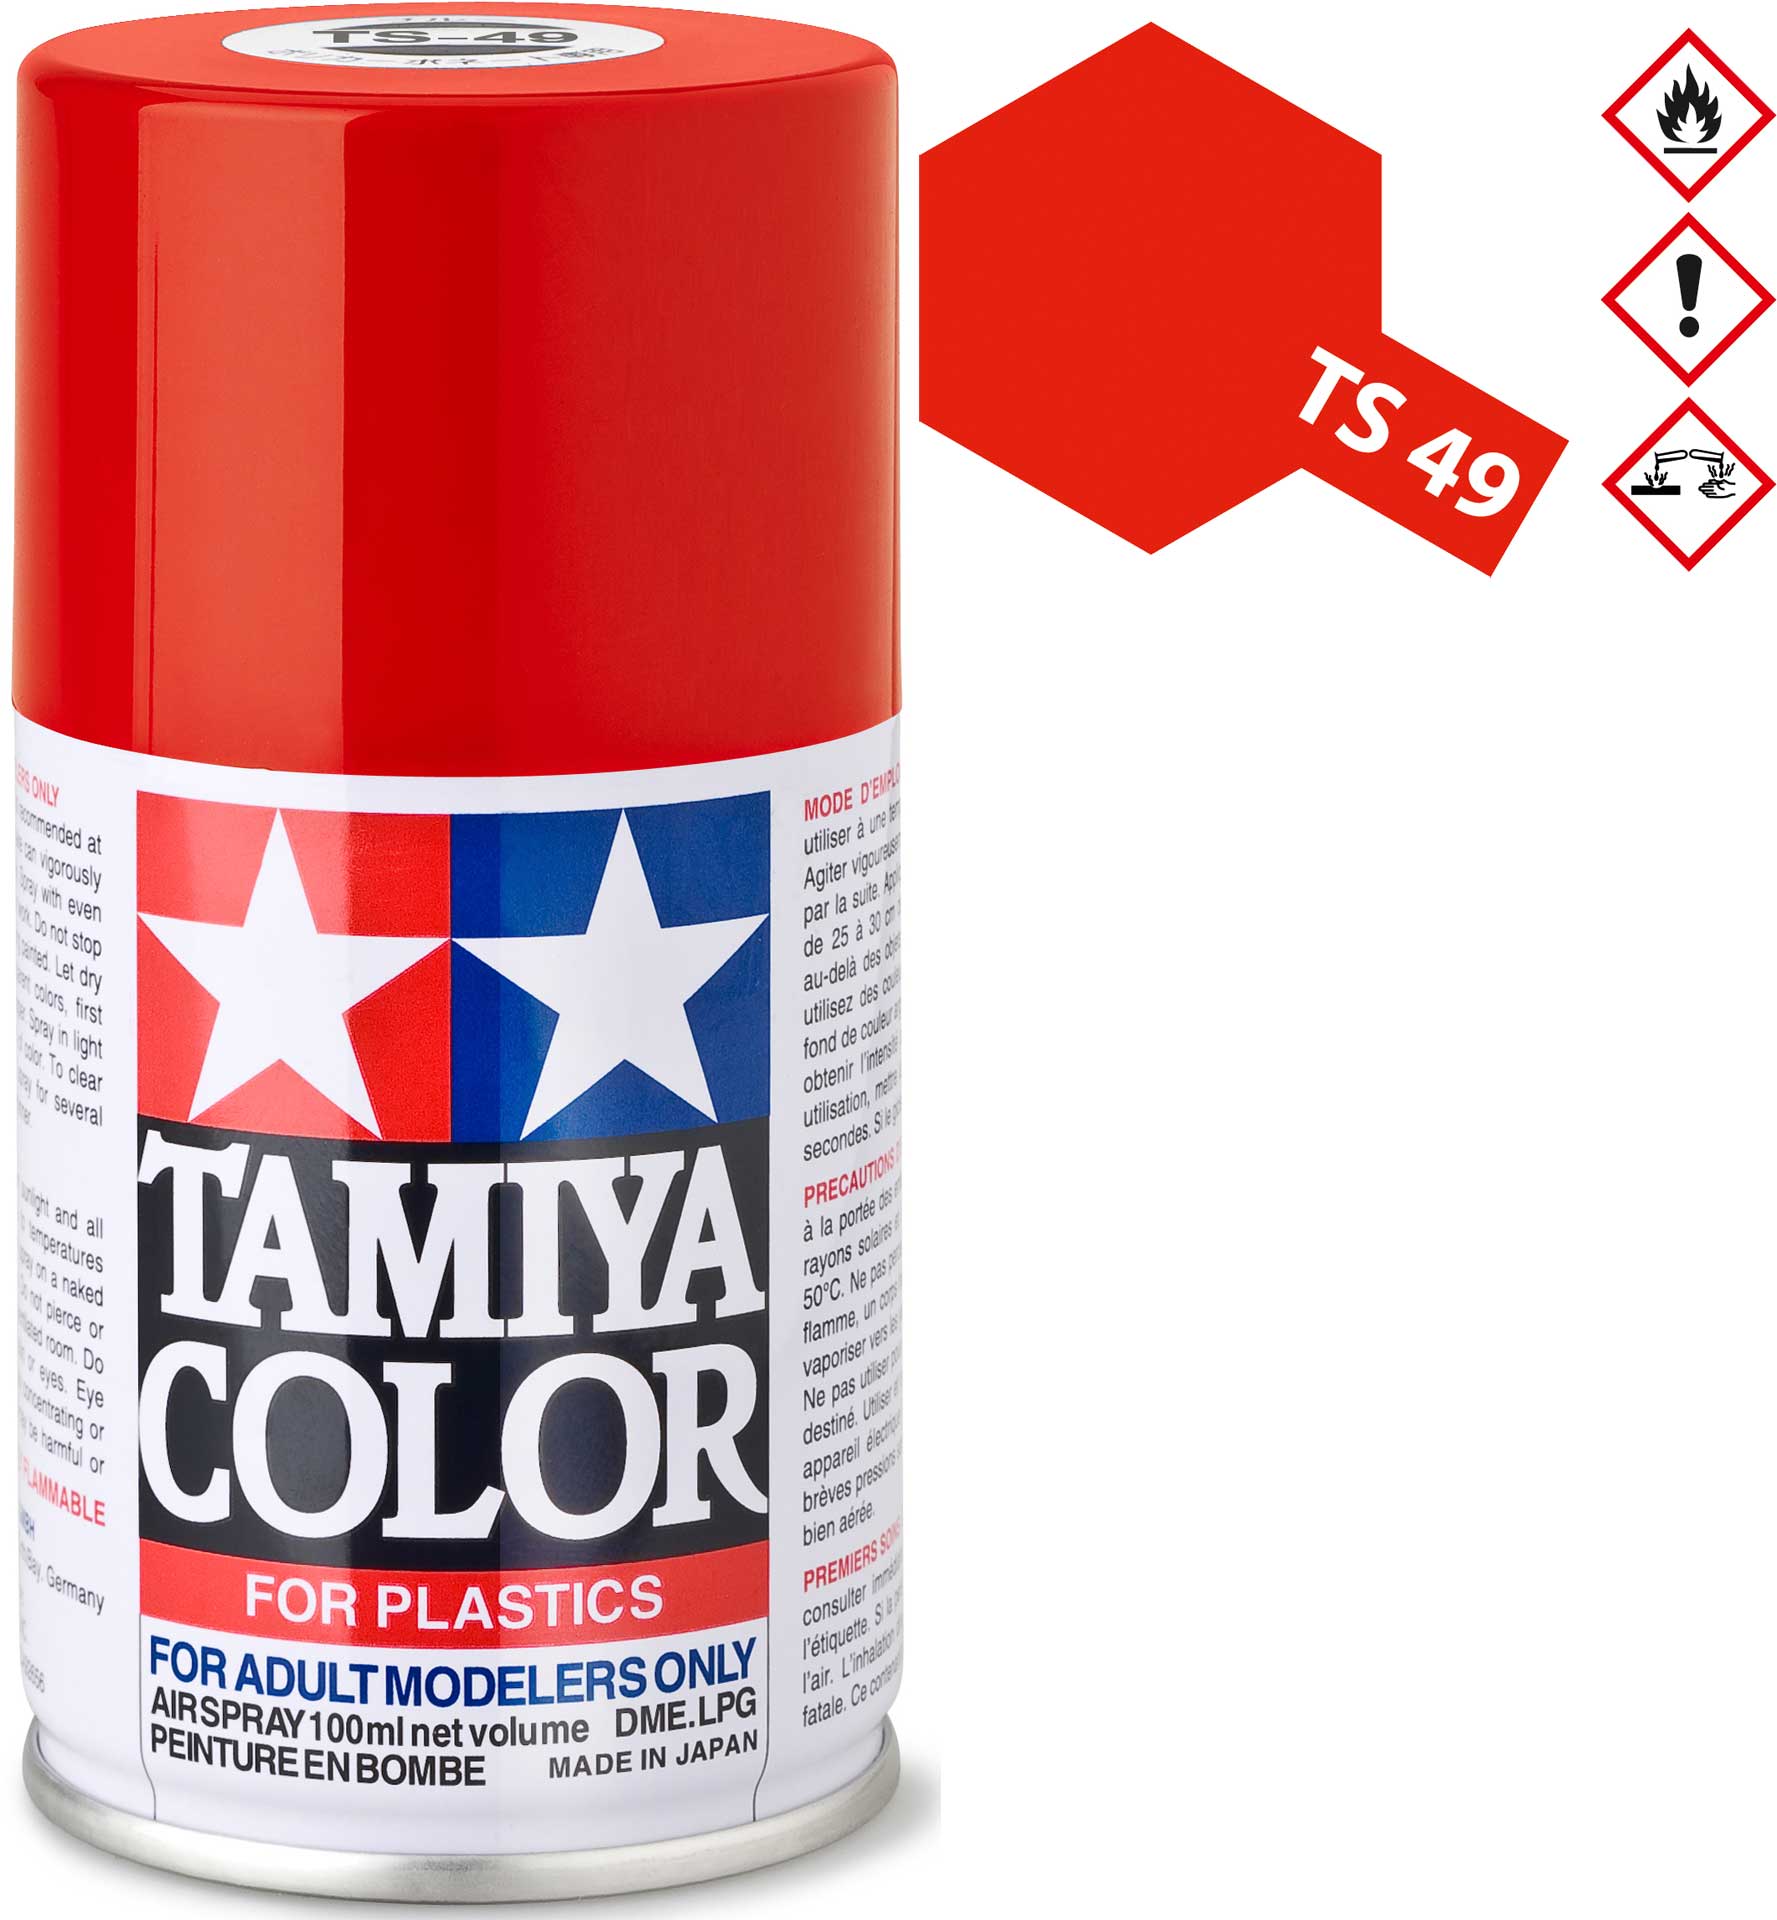 TAMIYA TS-49 Light red glossy Plastic Spray 100ml